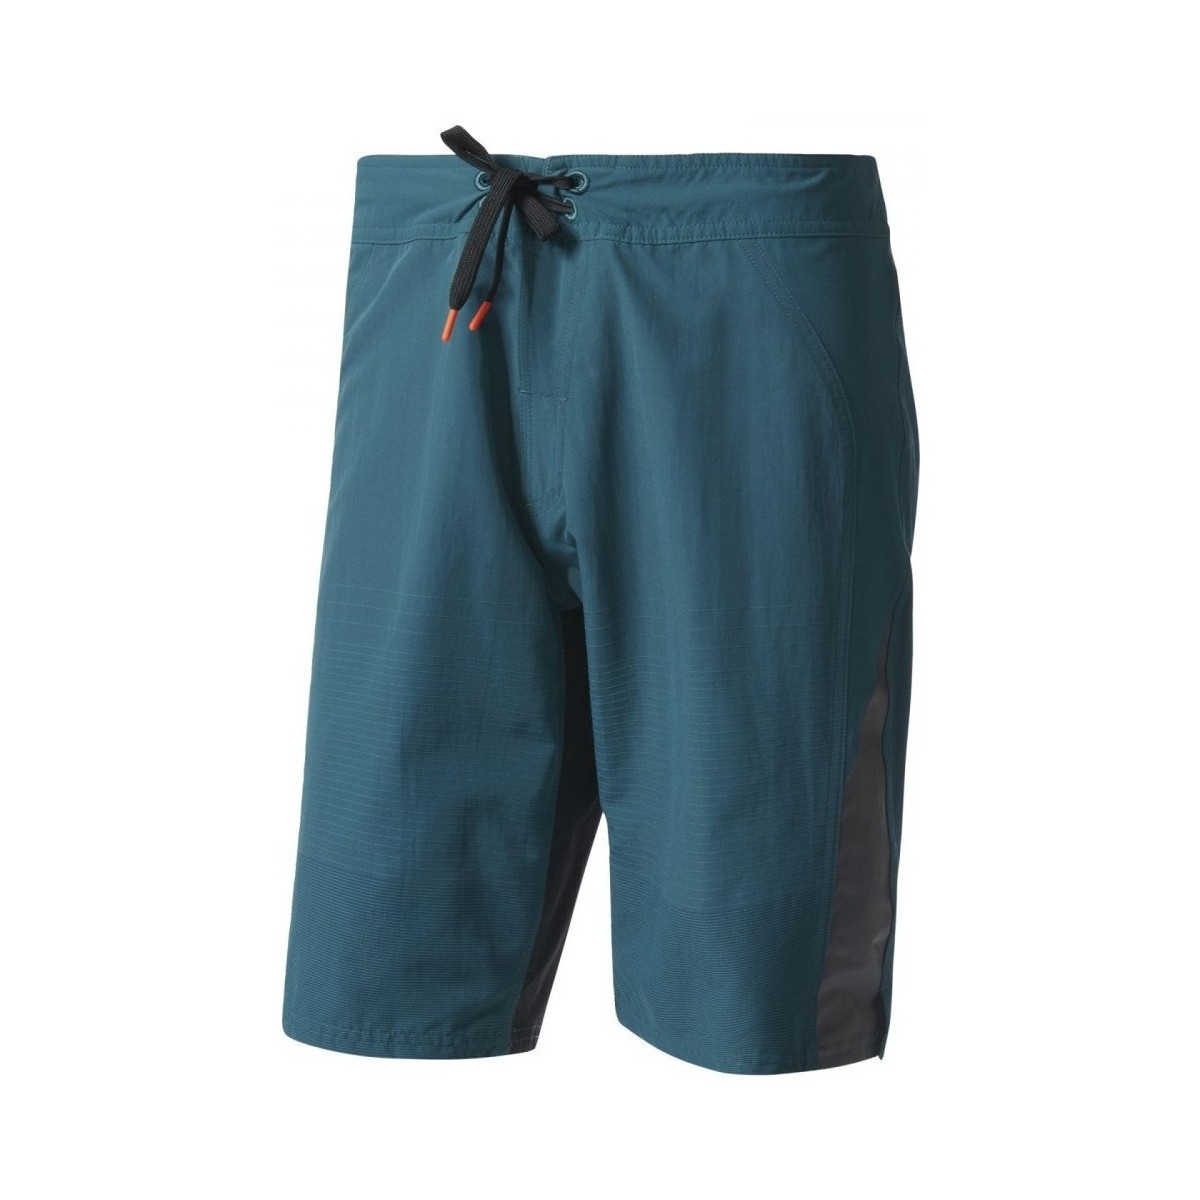 Textil Homem Shorts / Bermudas adidas Originals Crazytrain Premium Shorts Verde